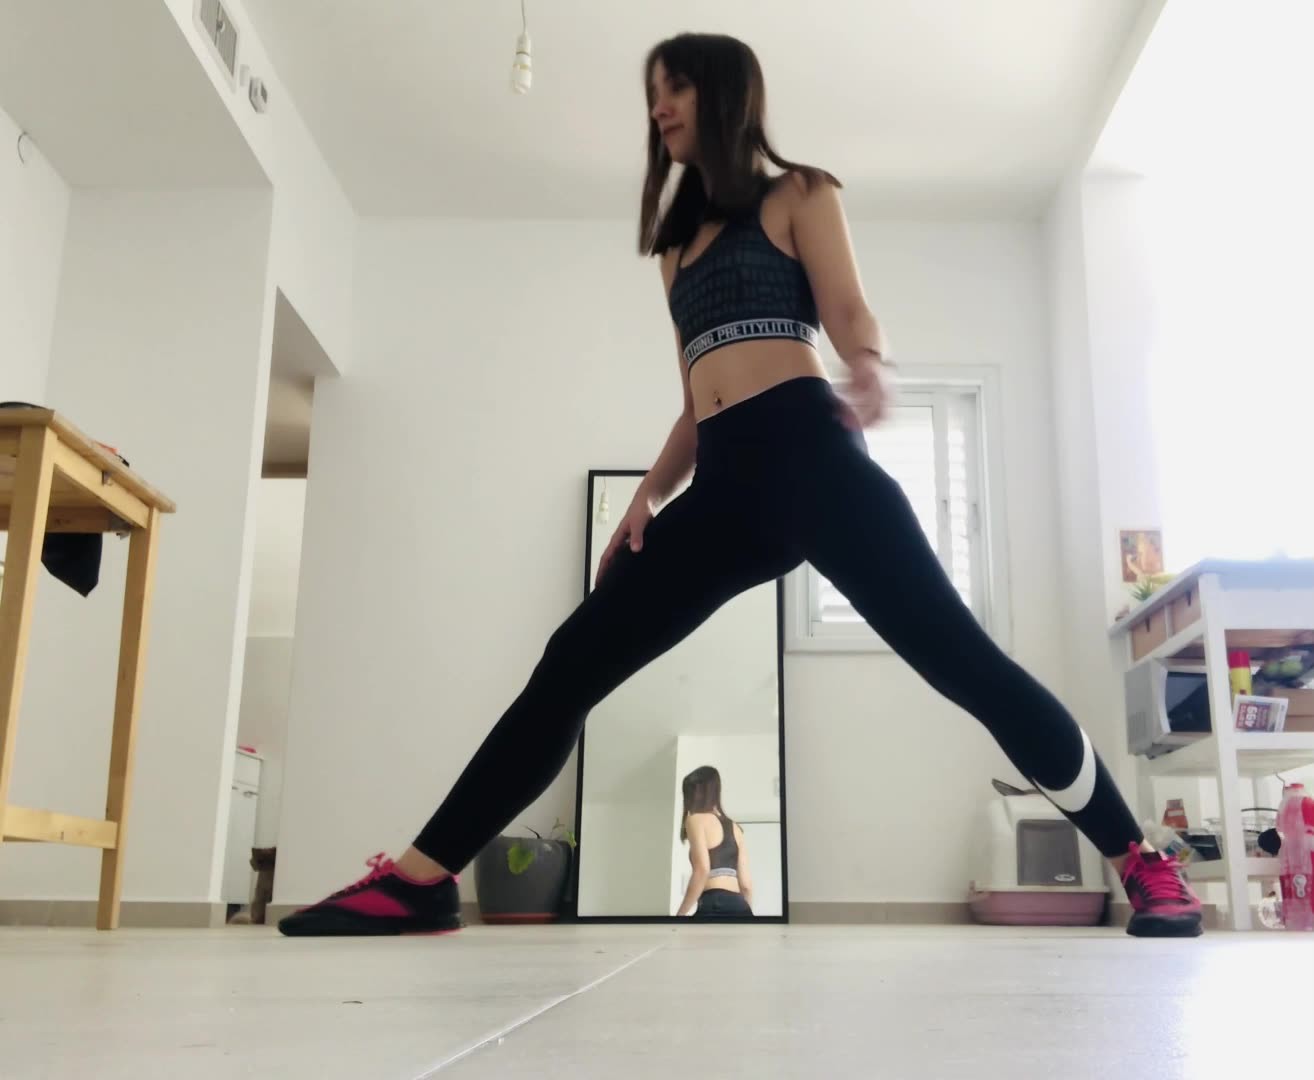 Princess Cin – I Practice My Flexibility For Sex Purposes